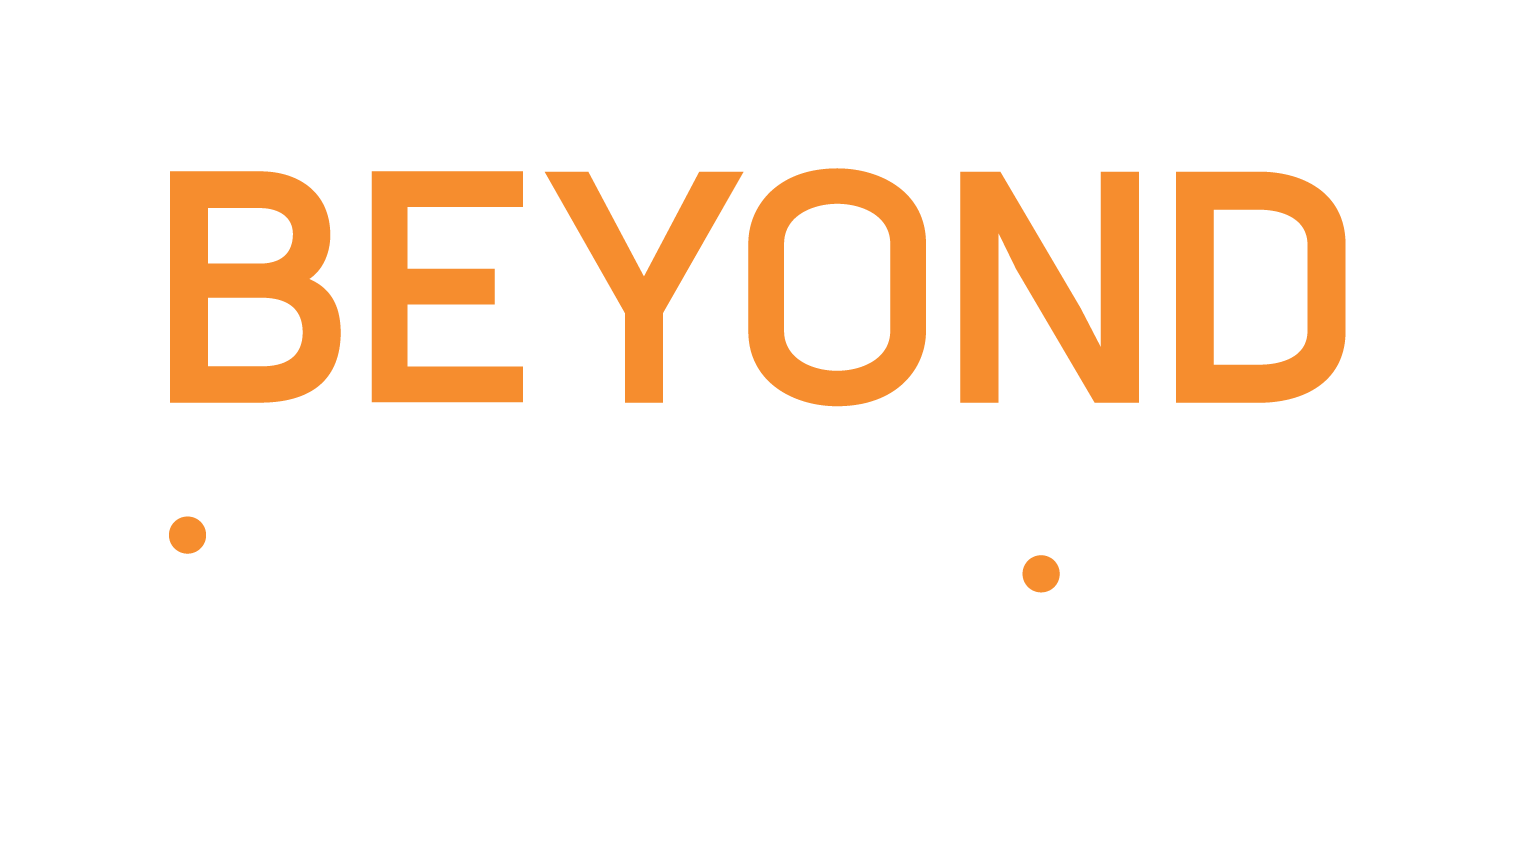 Beyond Pulse Logo